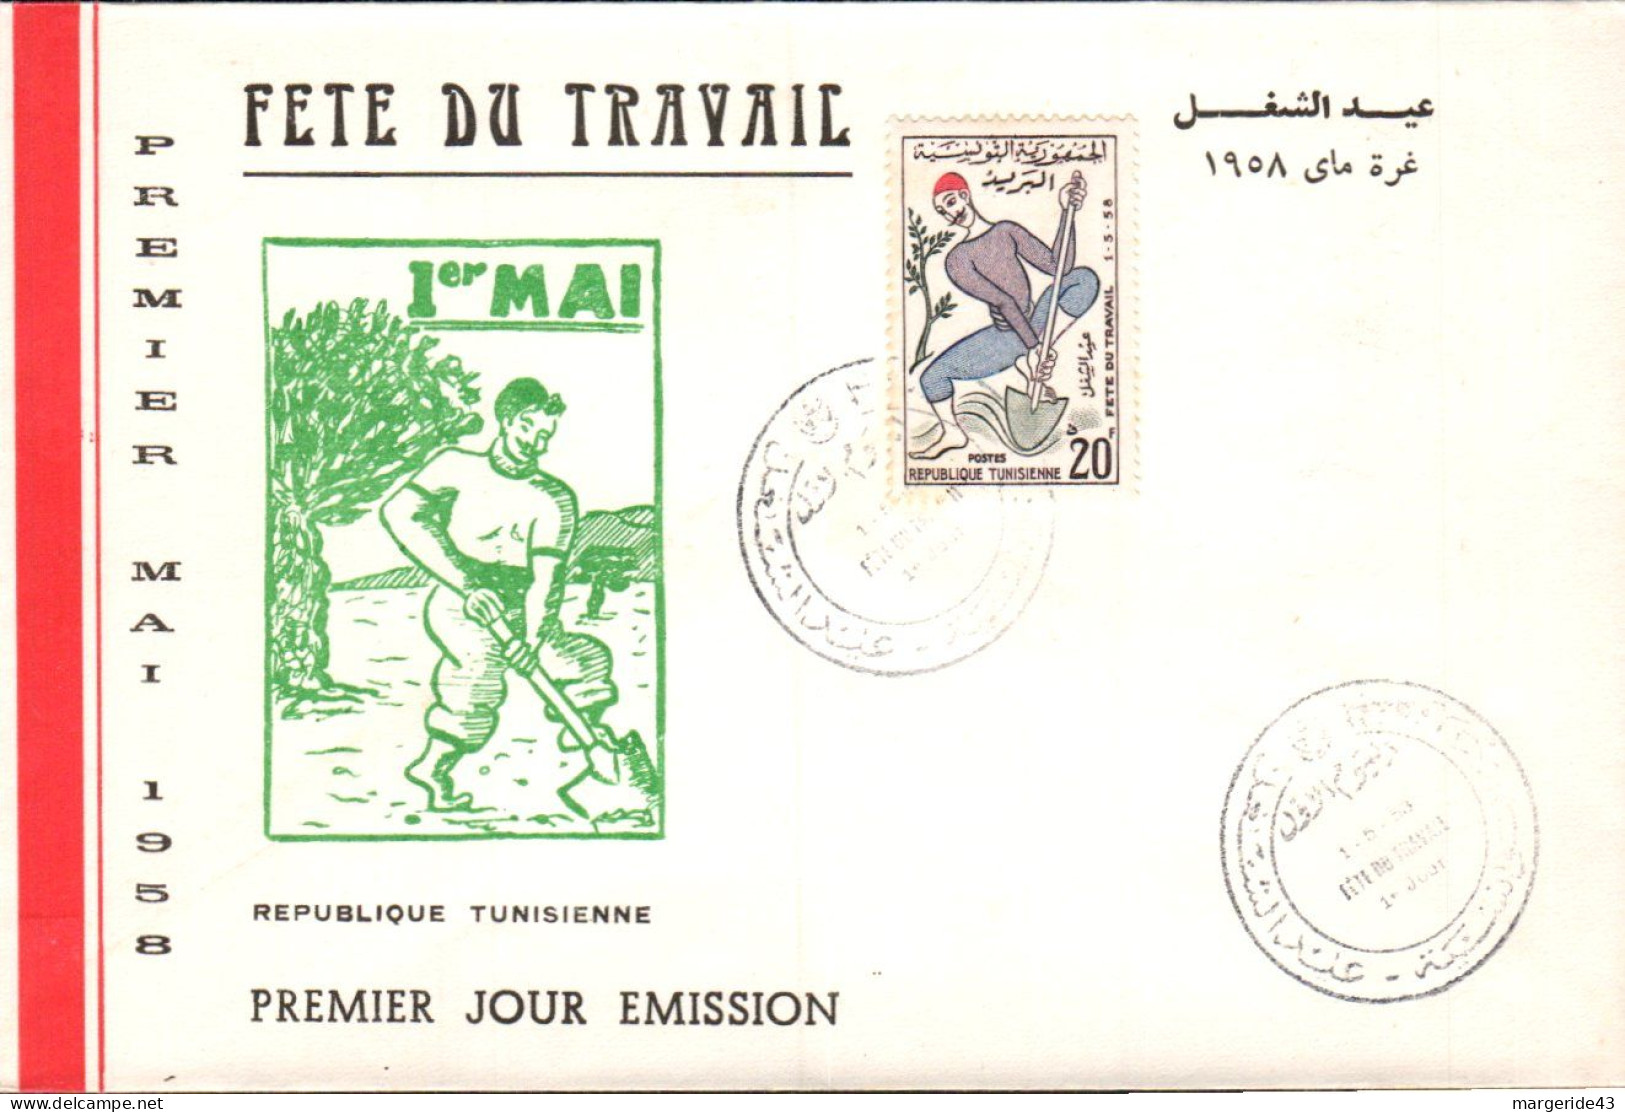 TUNISIE FDC 1958 FETE DU TRAVAIL 1 ER MAI - Tunisia